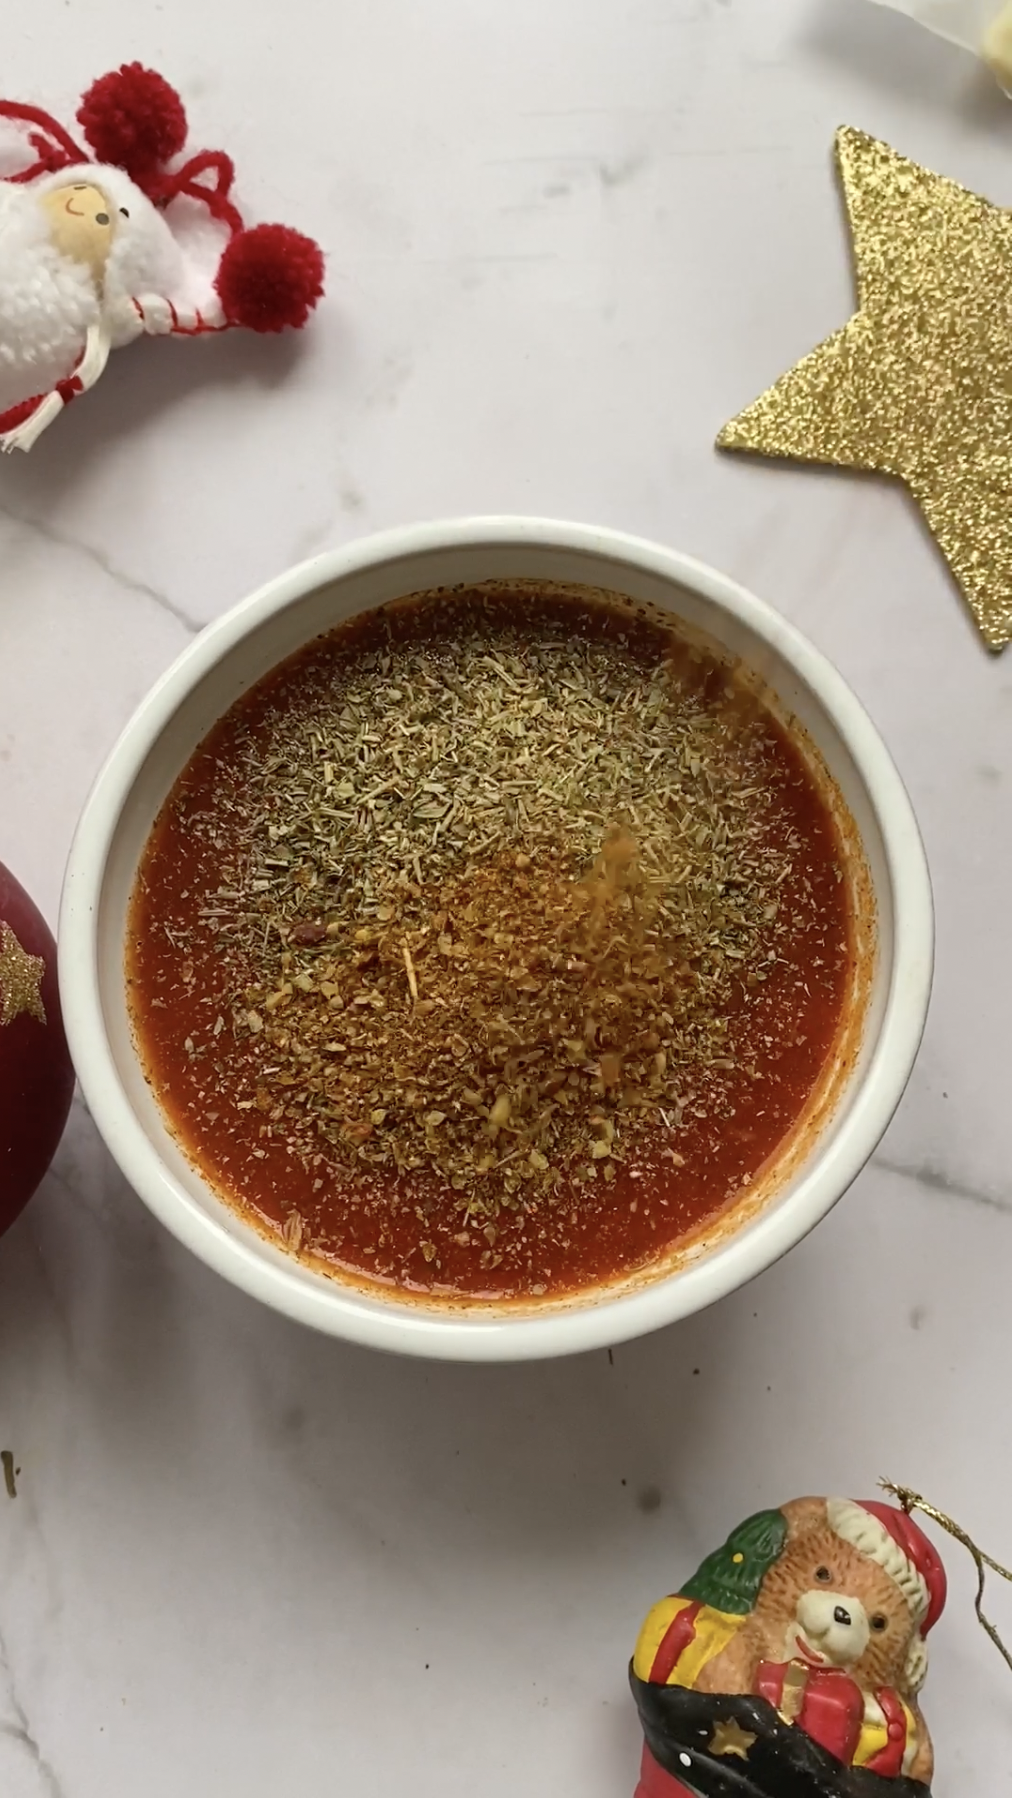 Italian seasoning added to the bowl of tomato sauce.